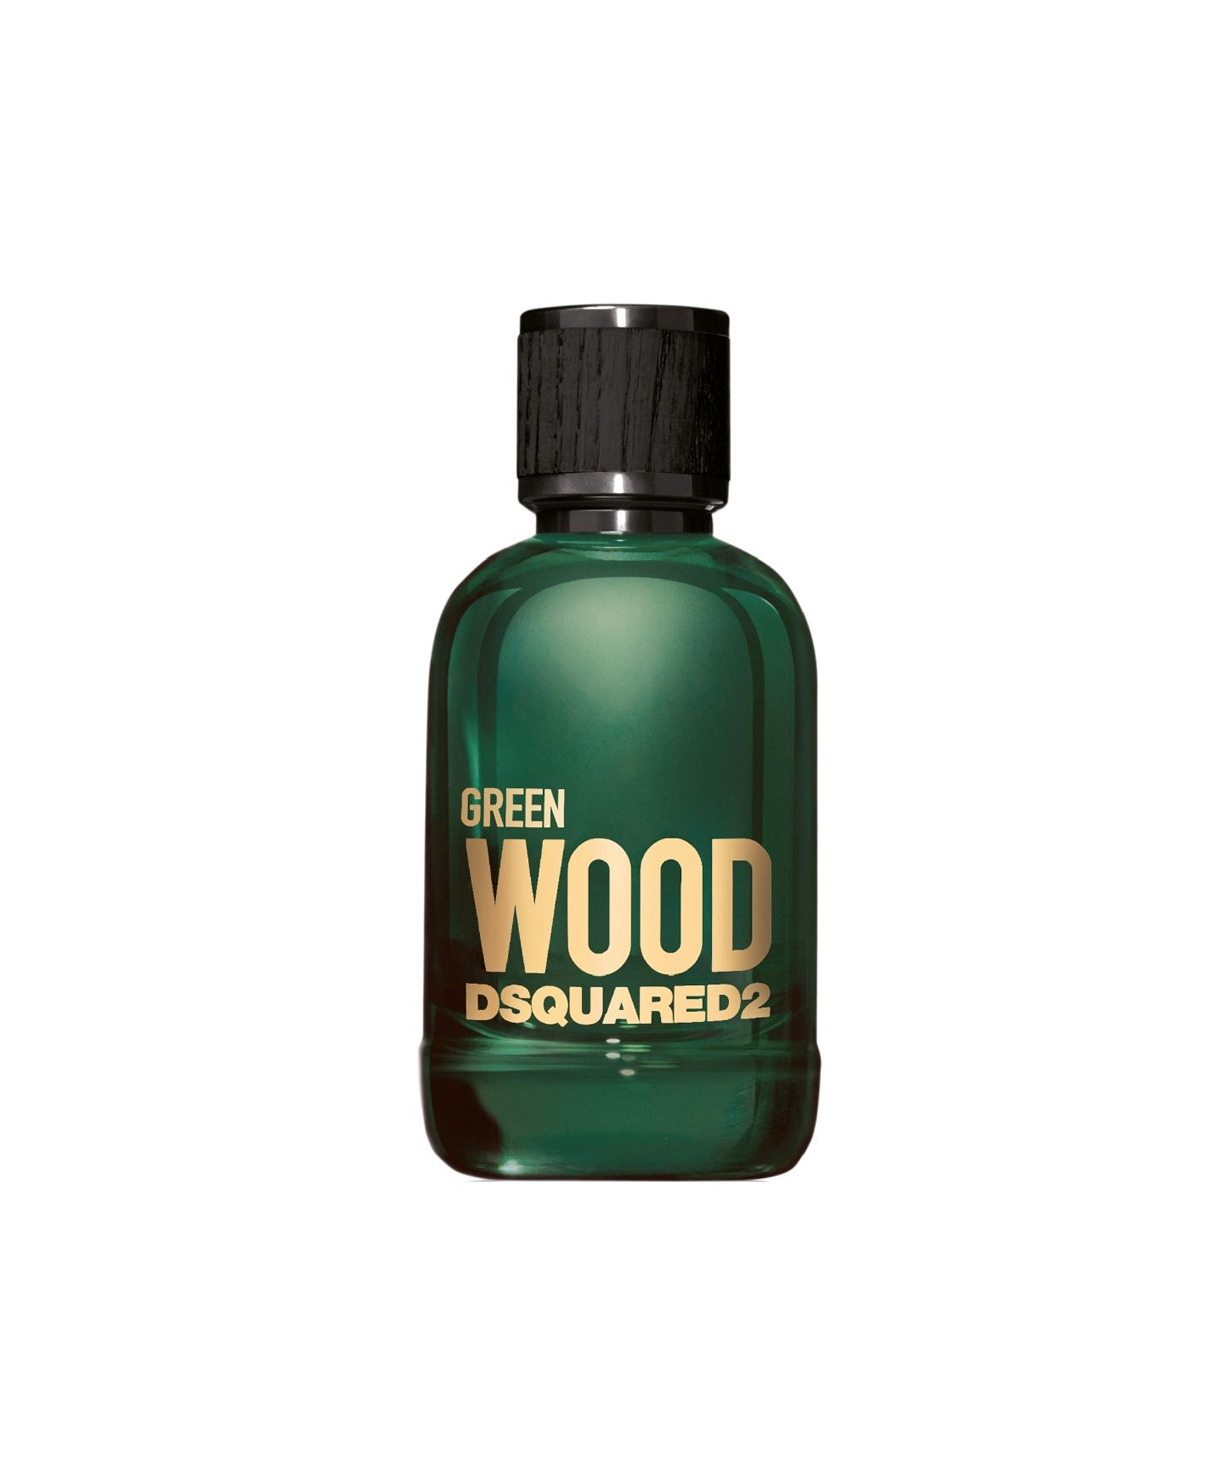 Perfume «Dsquared2» Green Wood, for men, 30 ml